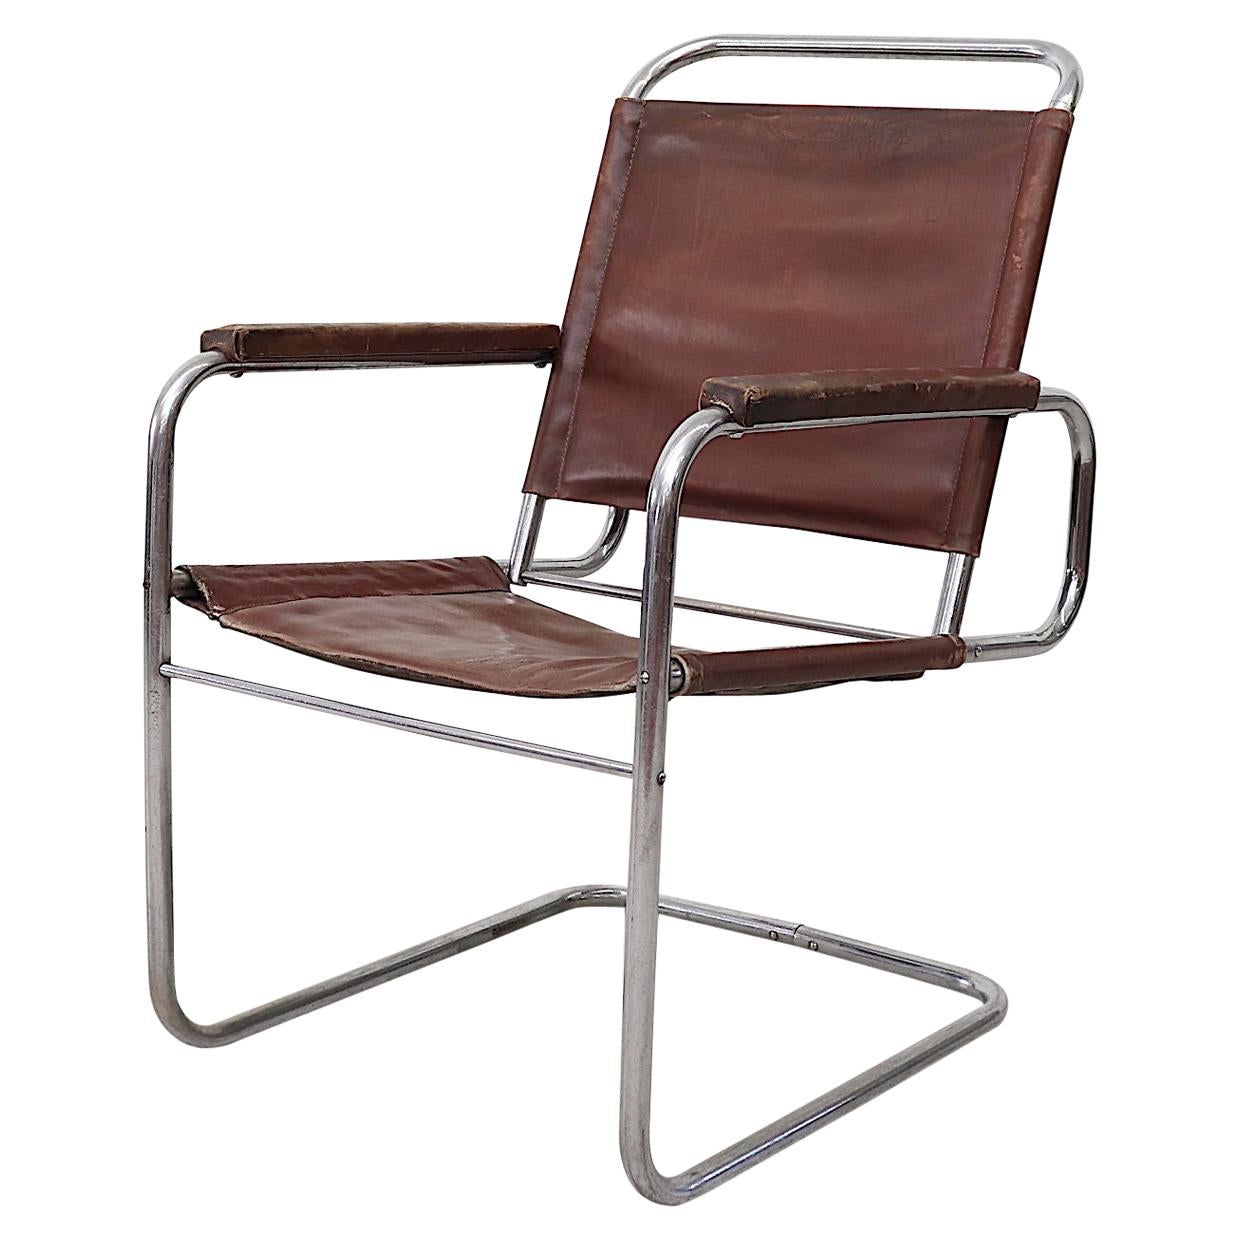 Marcel Breuer Bauhaus-Sessel aus dunkelbraunem Leder und Chromrohr